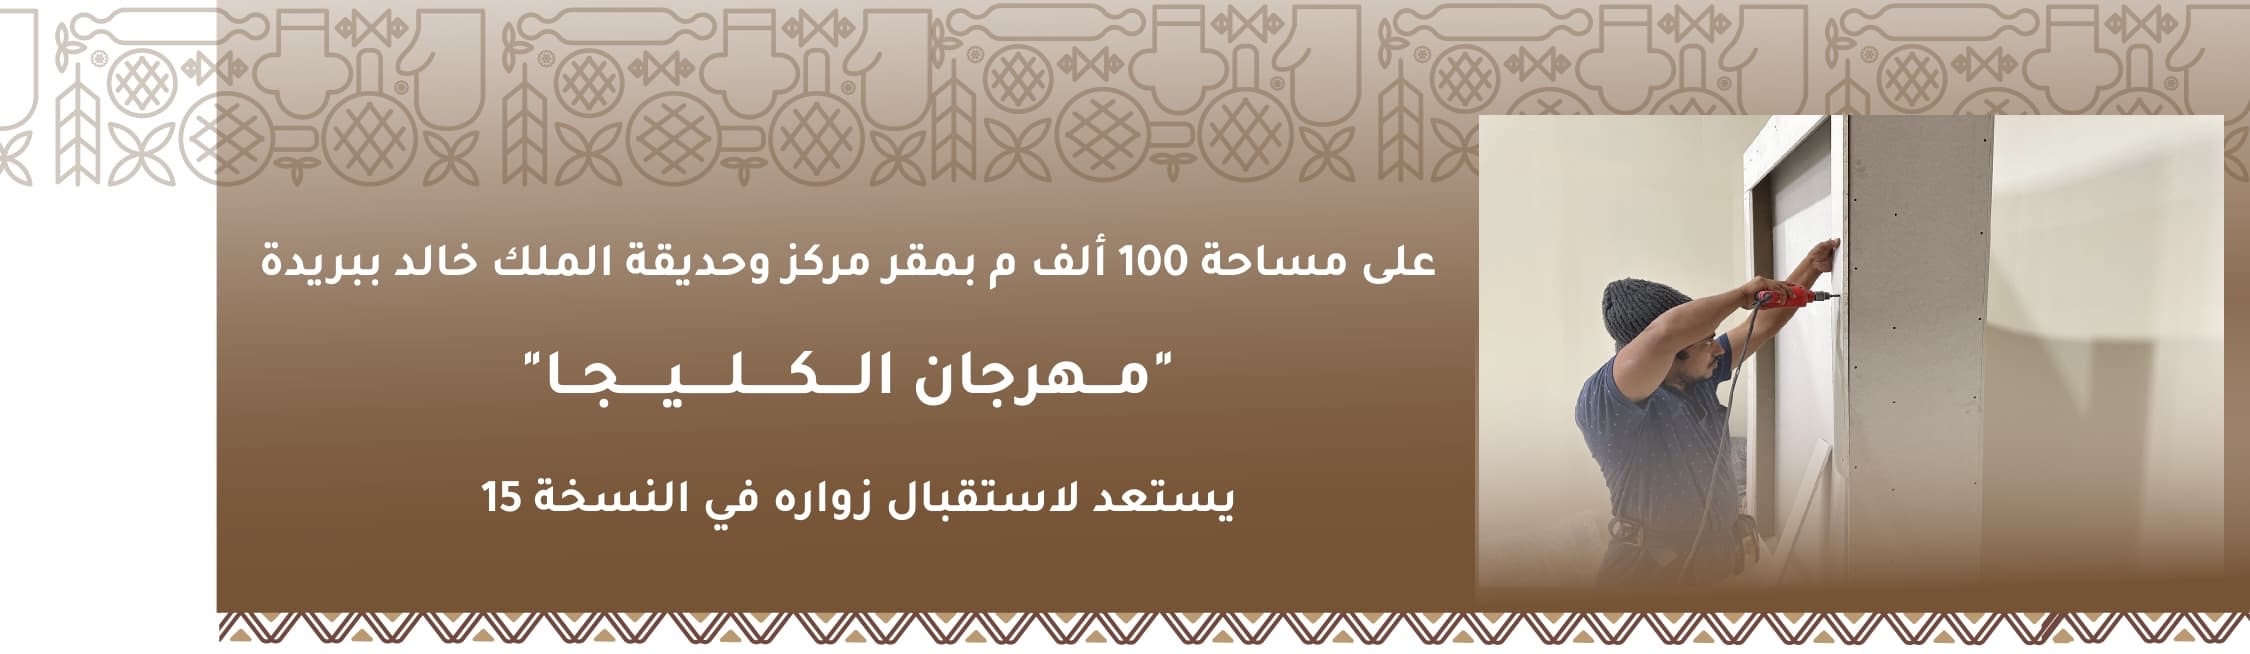 <span>على مساحة 100 ألف م بمقر مركز وحديقة الملك خالد ببريدة</span>
